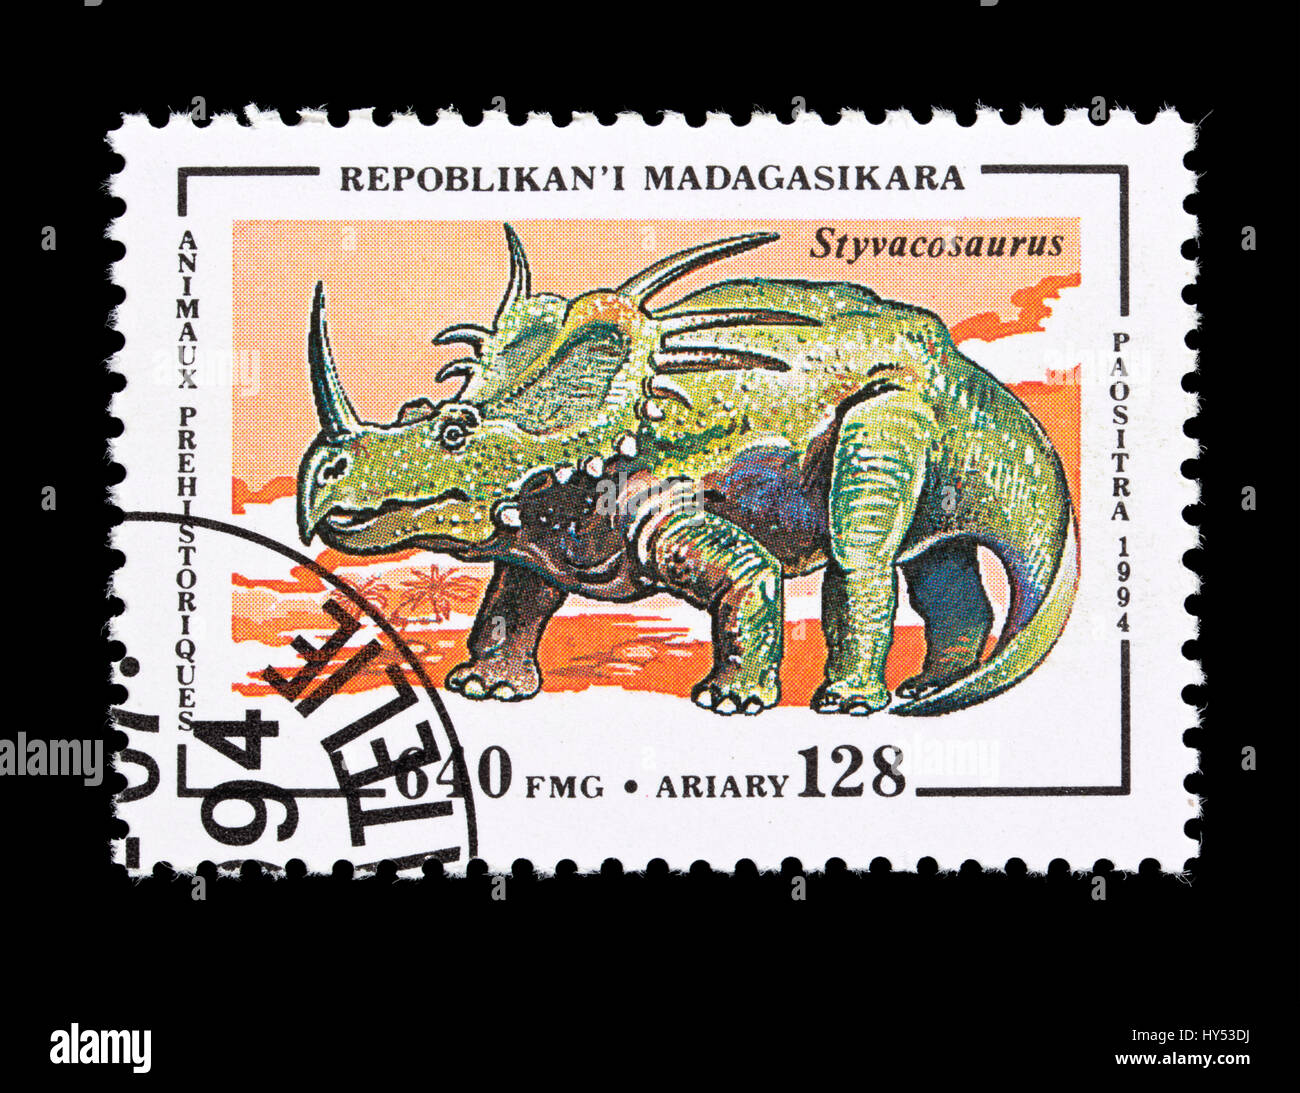 Francobollo dal Madagascar raffigurante un dinosauro styvacosaurus Foto Stock